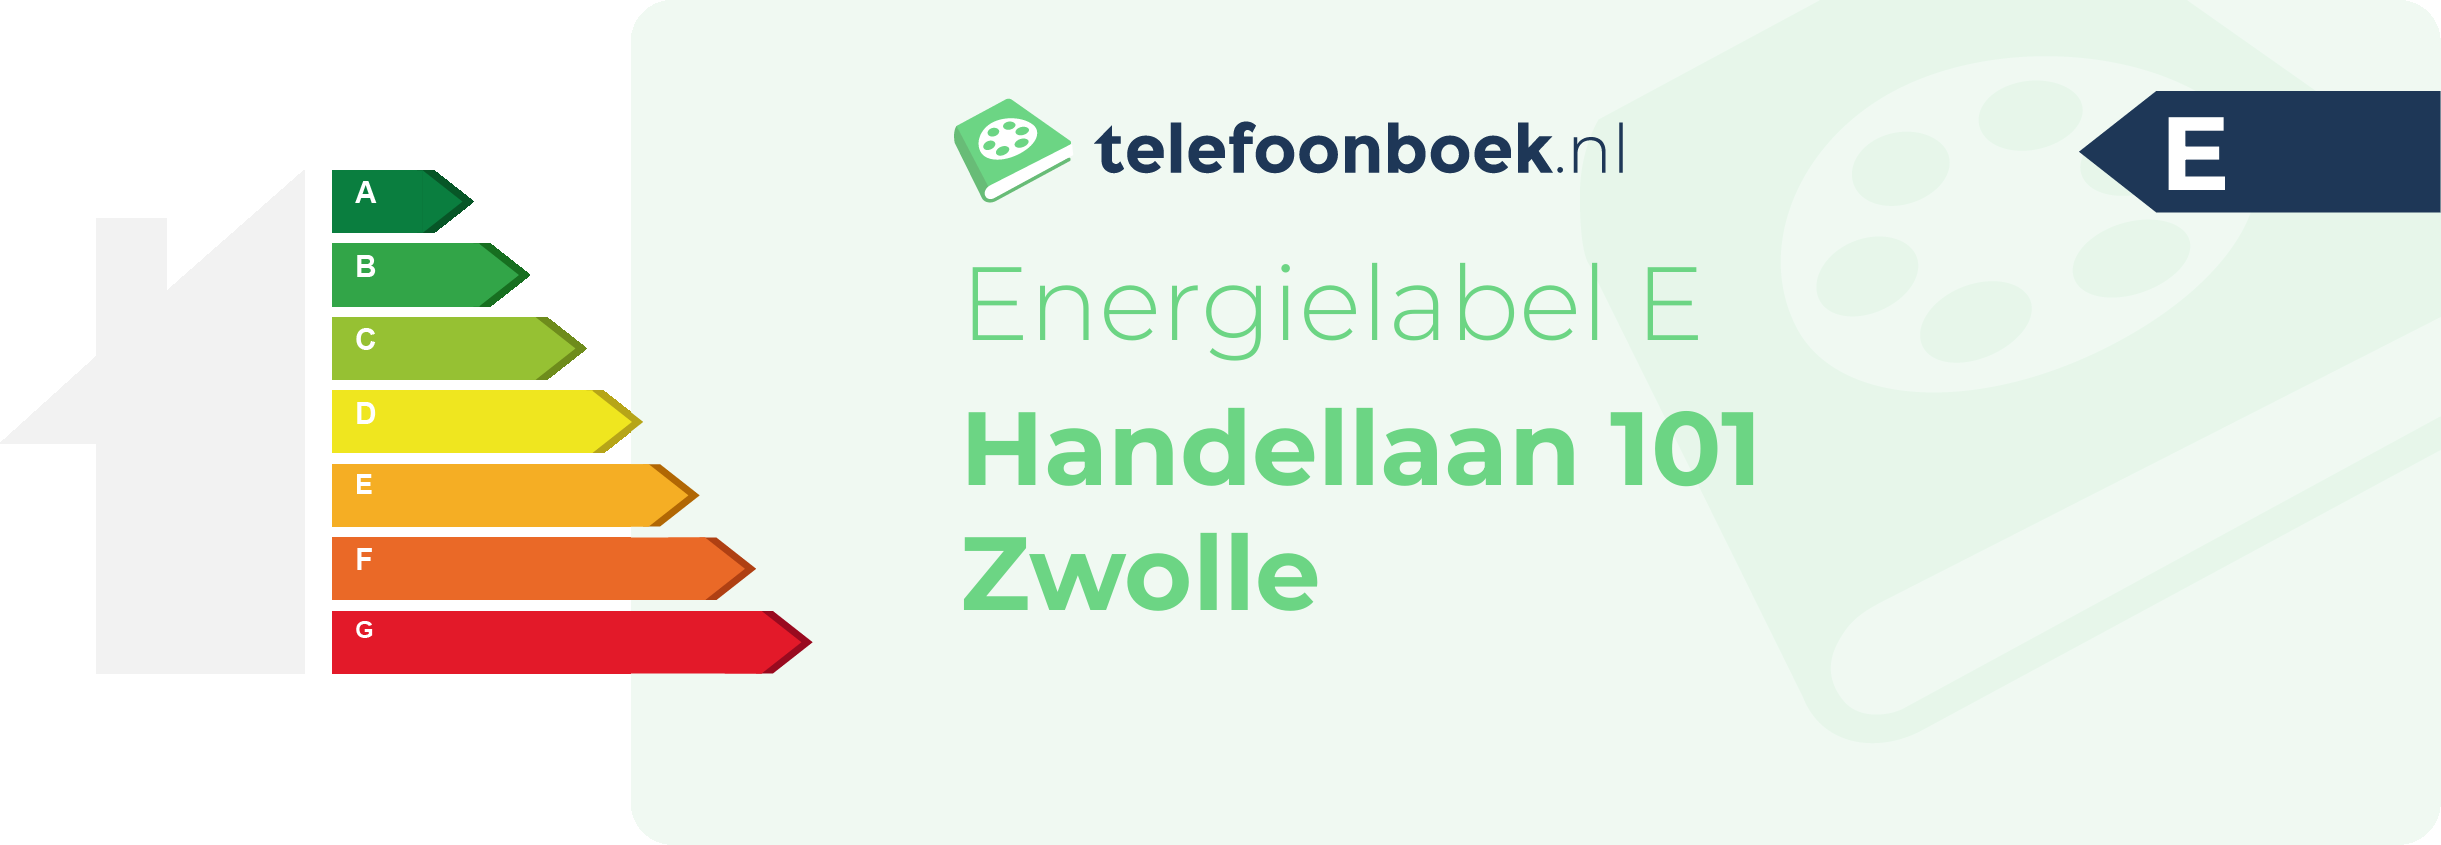 Energielabel Handellaan 101 Zwolle